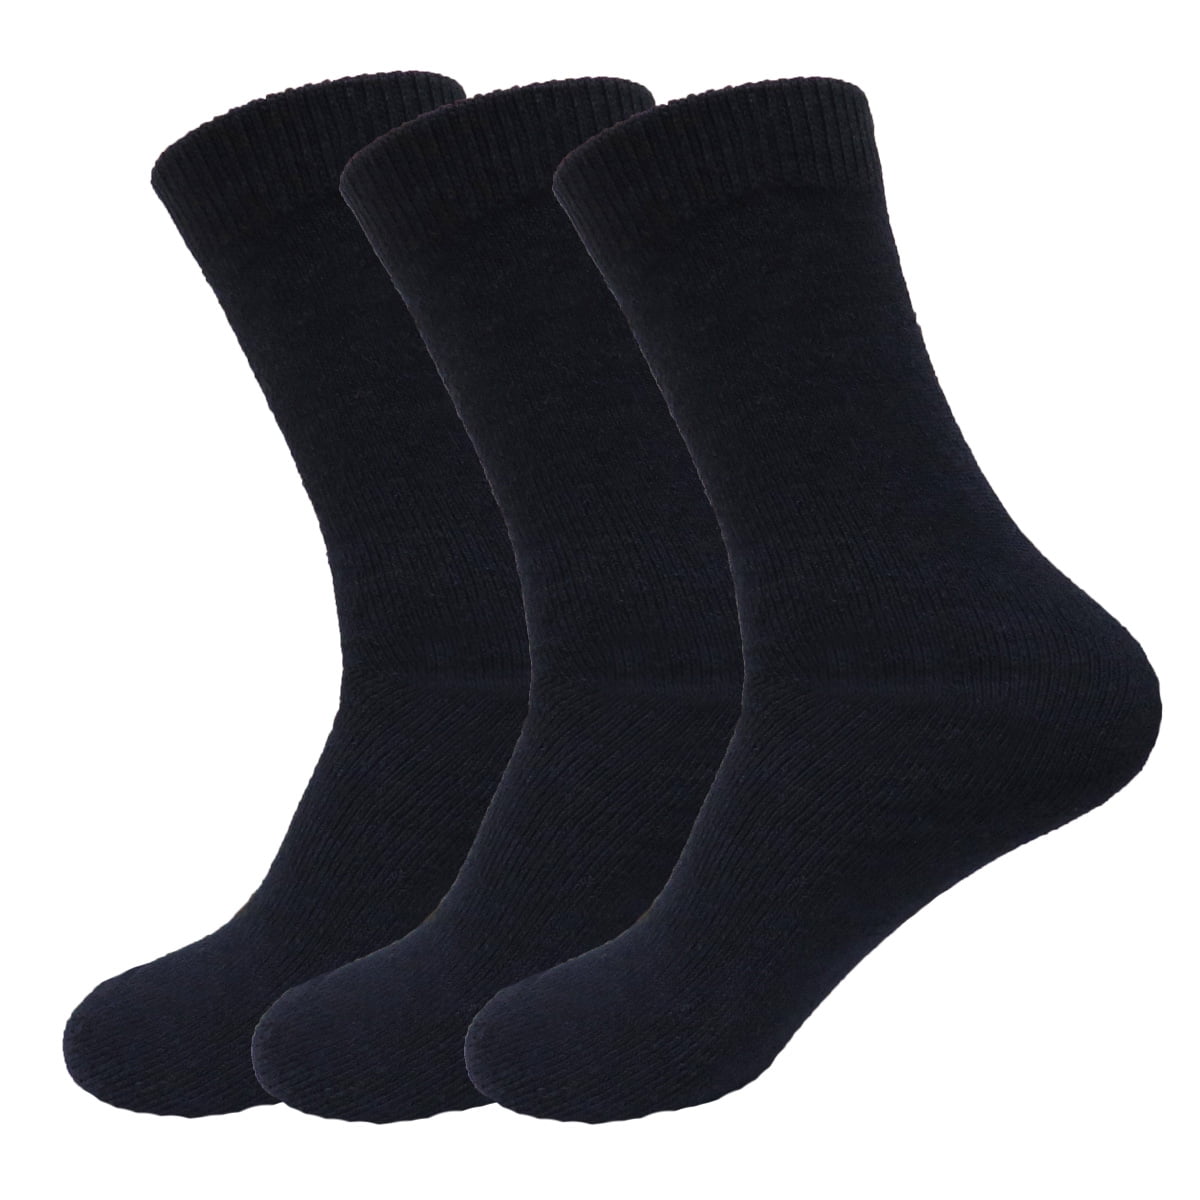 6 Pairs Men's Warm Thermal Winter Socks (Navy) - Walmart.com